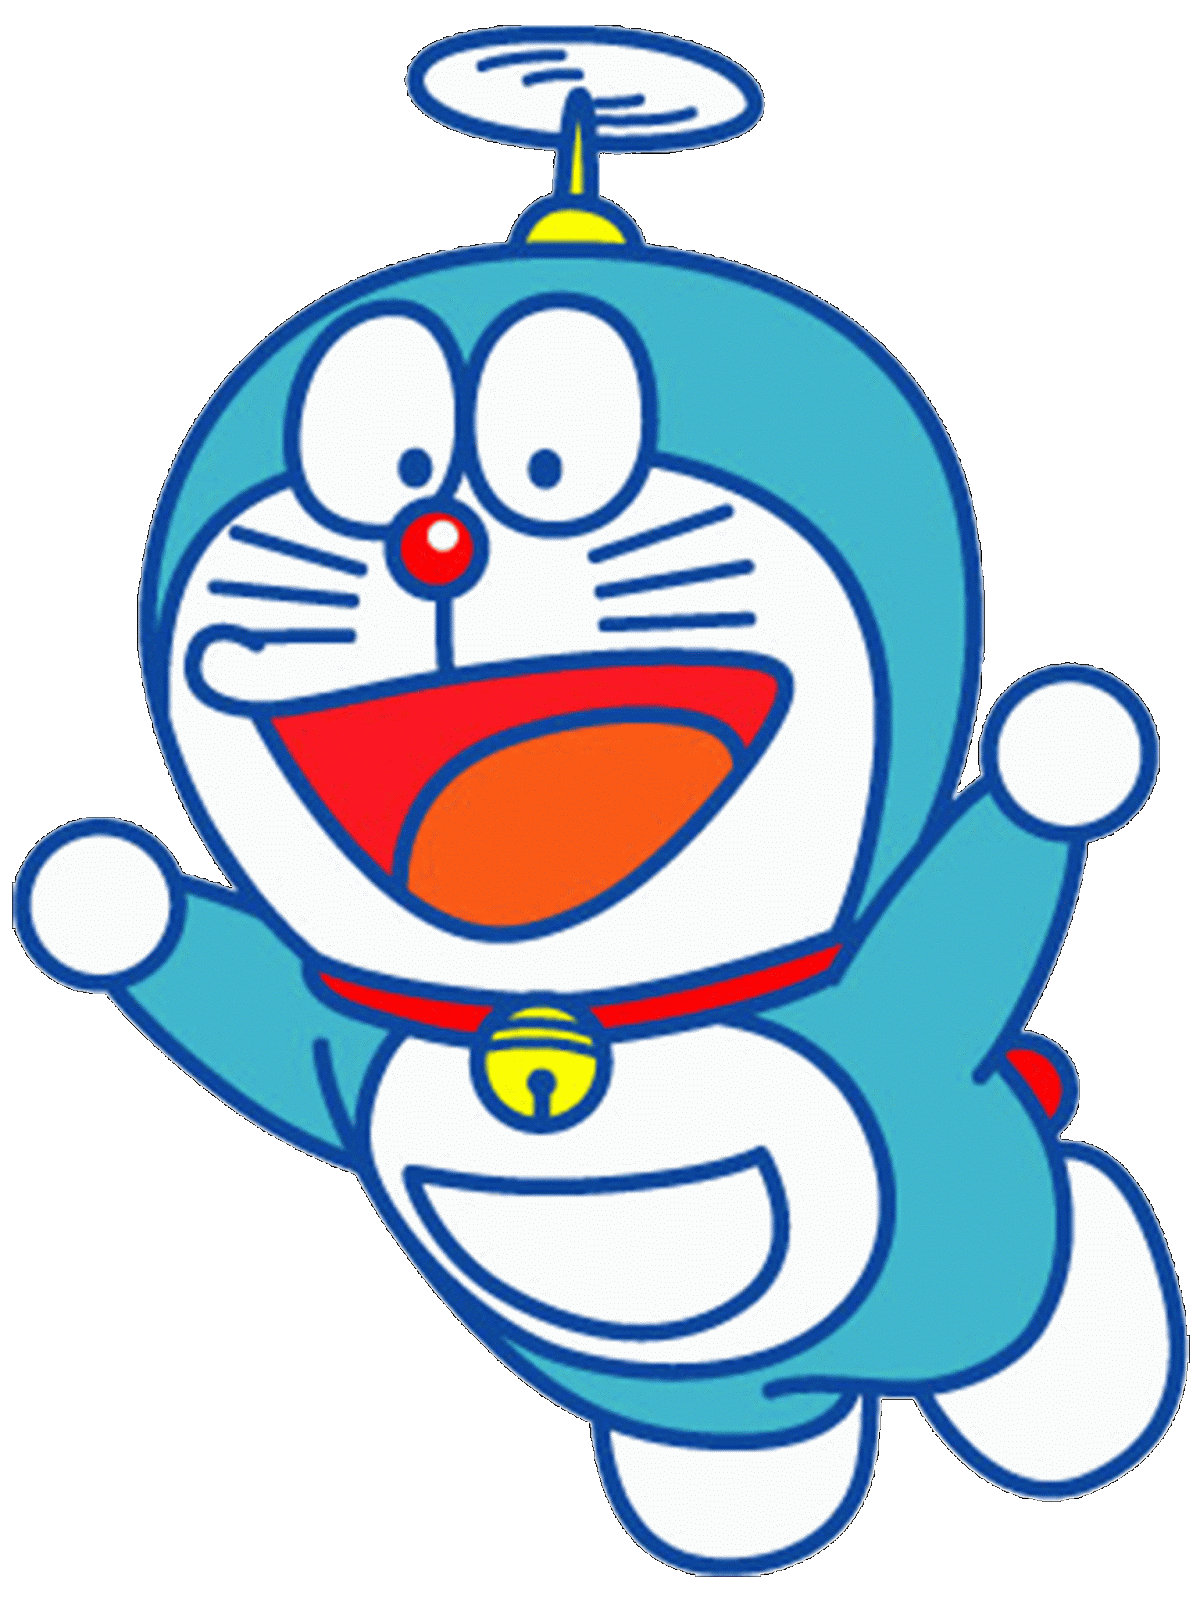 Contoh Gambar  Ilustrasi Doraemon  Contoh KR